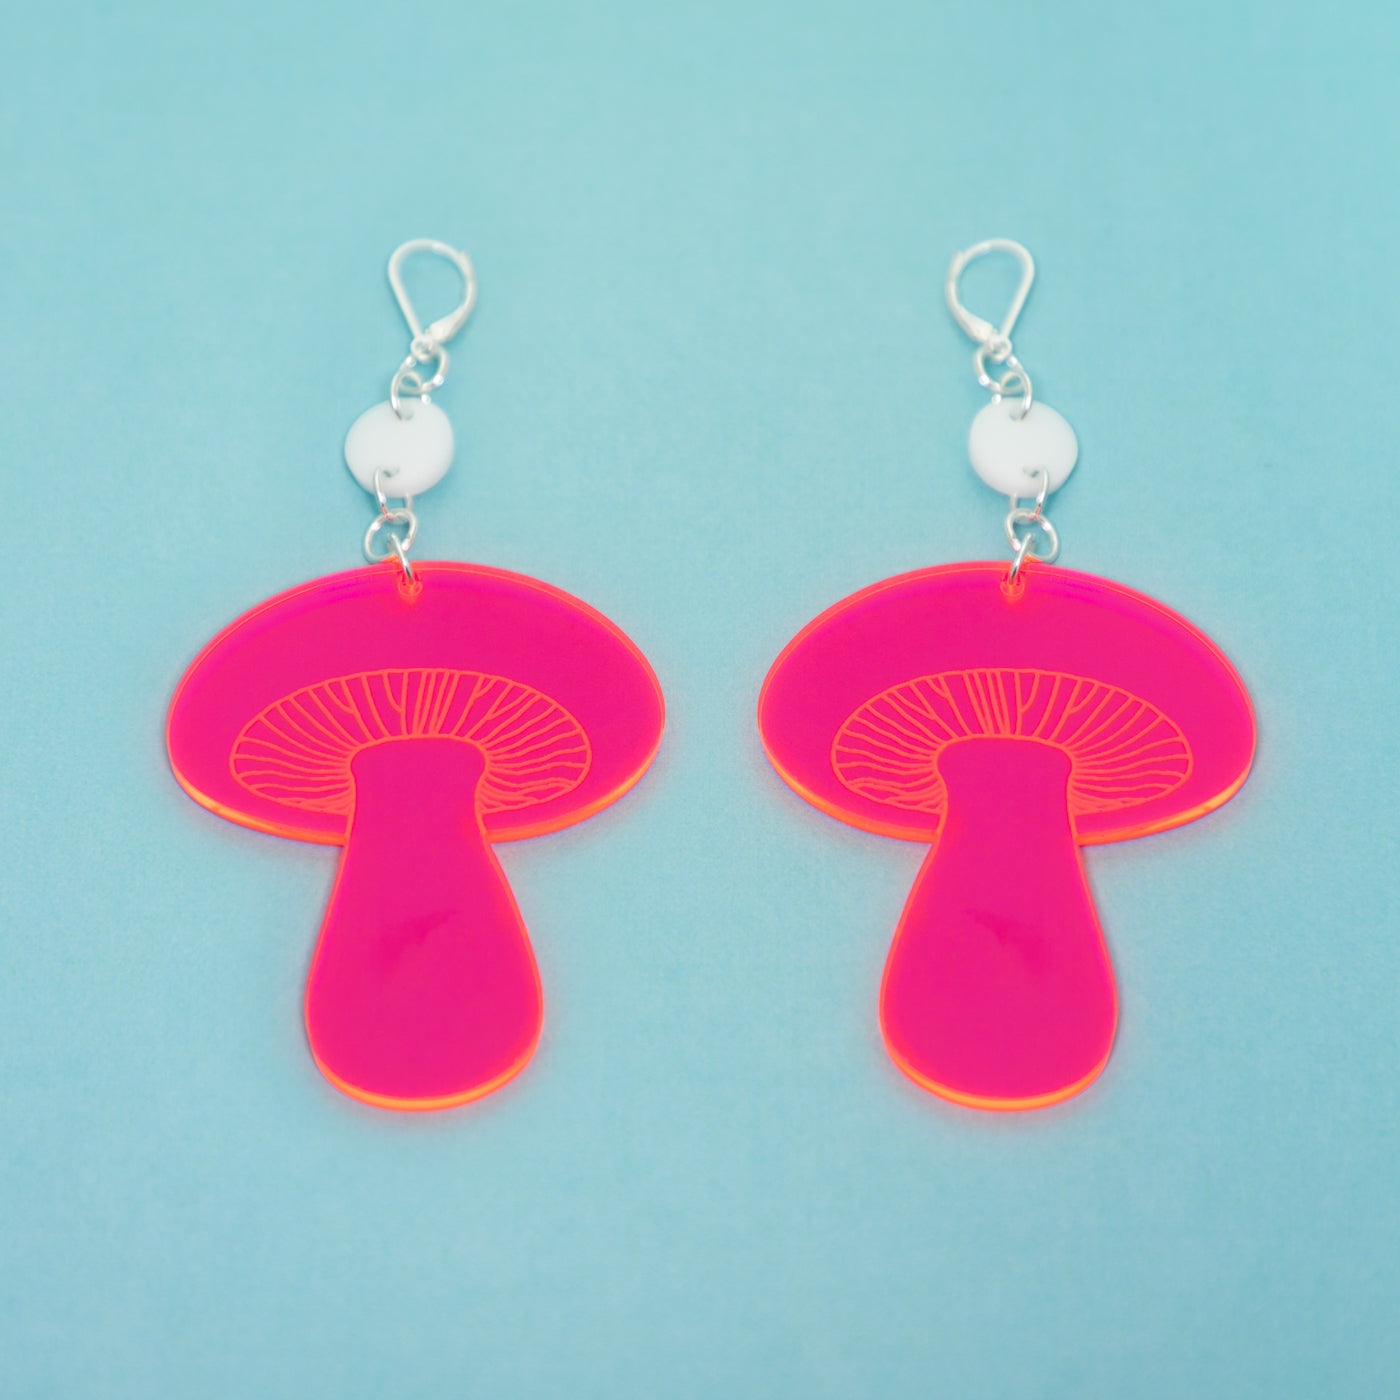 The Gilly Mushroom Dot & Chain Earrings,EarringMindFlowers